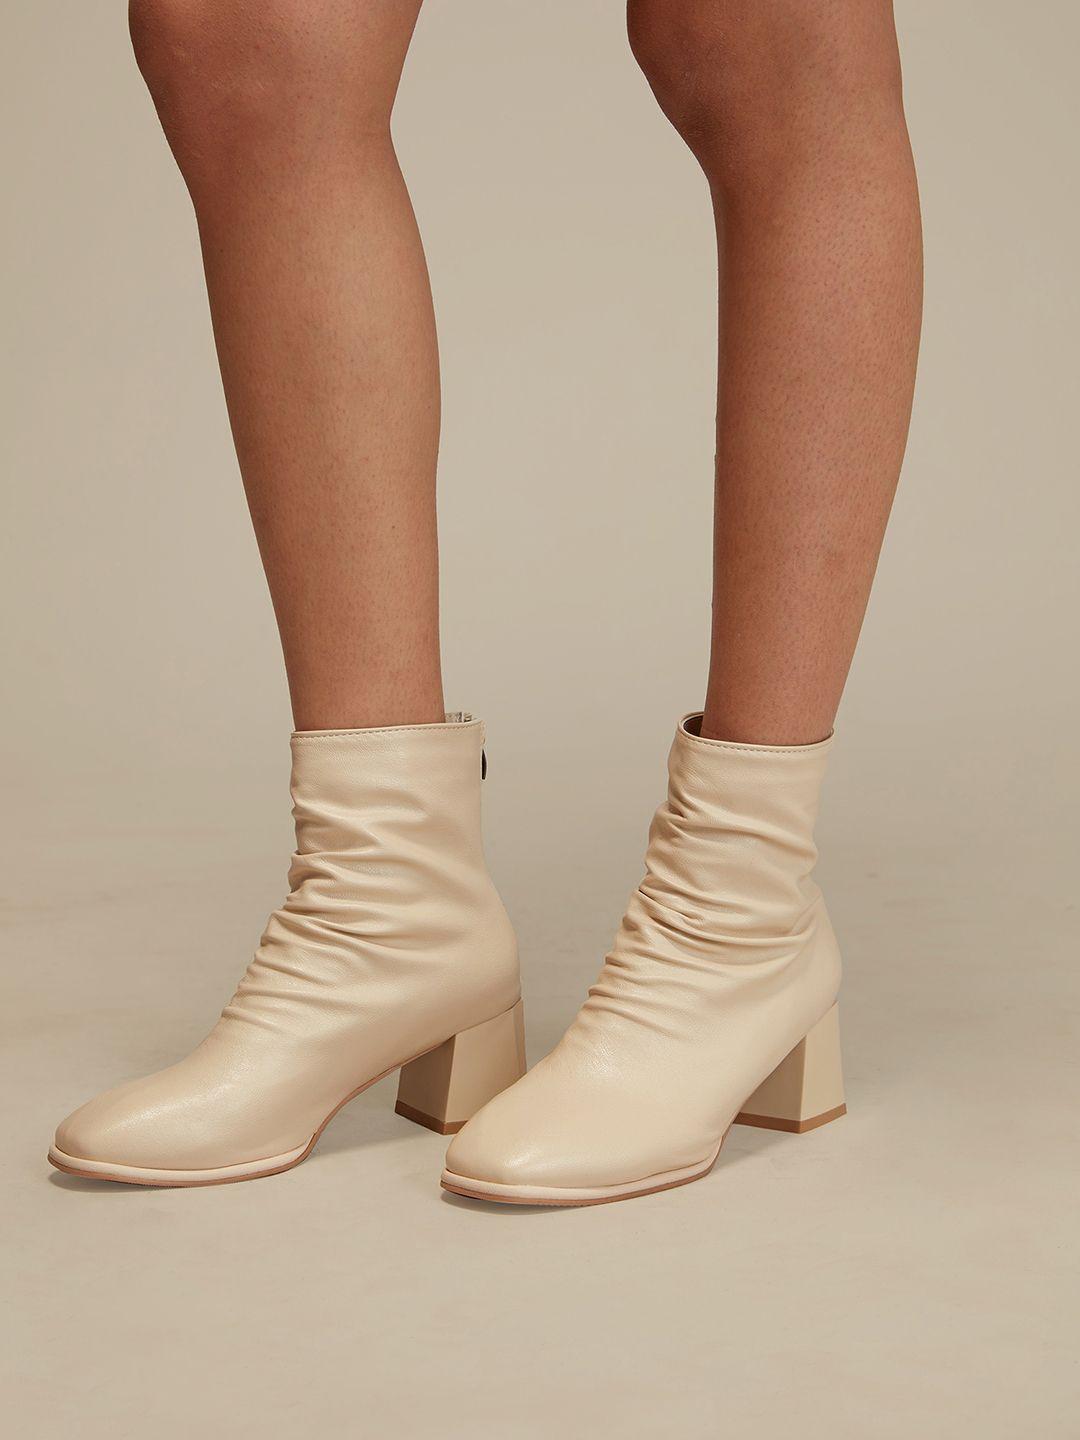 20dresses women off white ankle length block heel boots